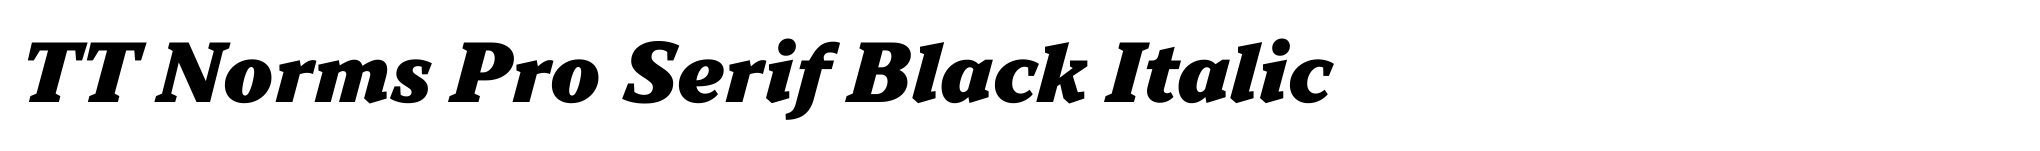 TT Norms Pro Serif Black Italic image